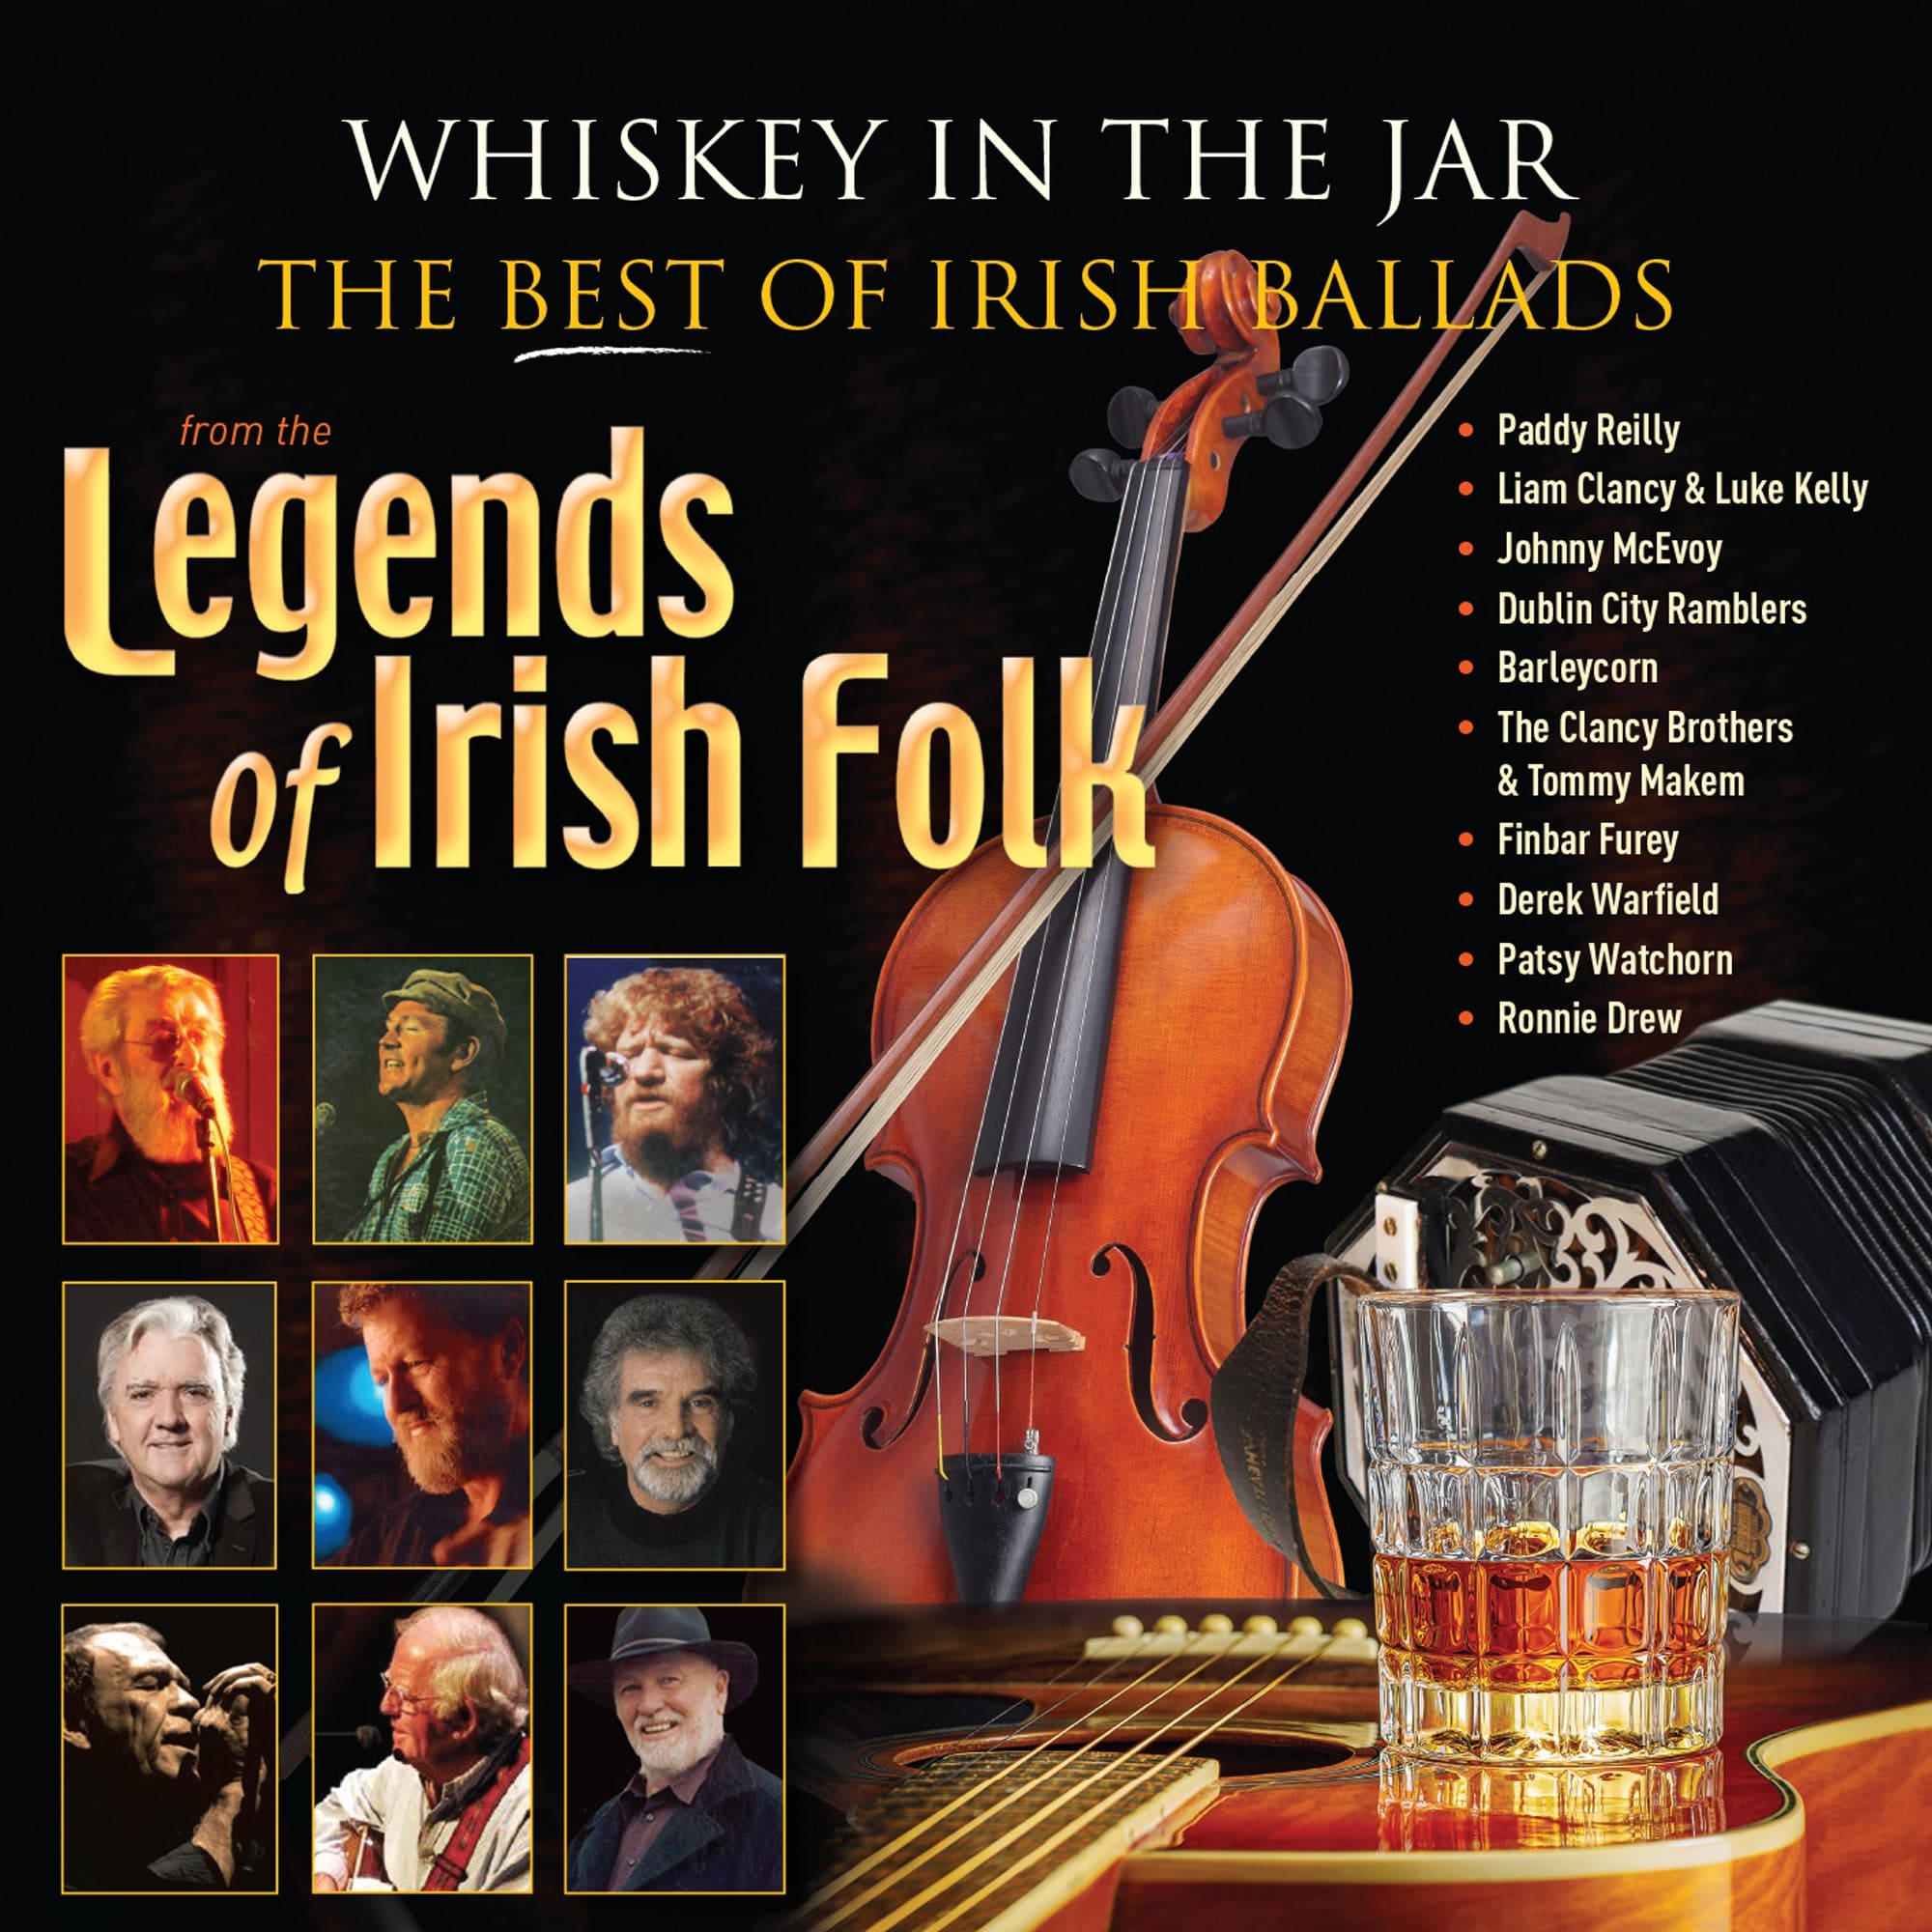 Whiskey In The Jar - The Best of Irish Ballads from Legends of Irish Folk [CD]